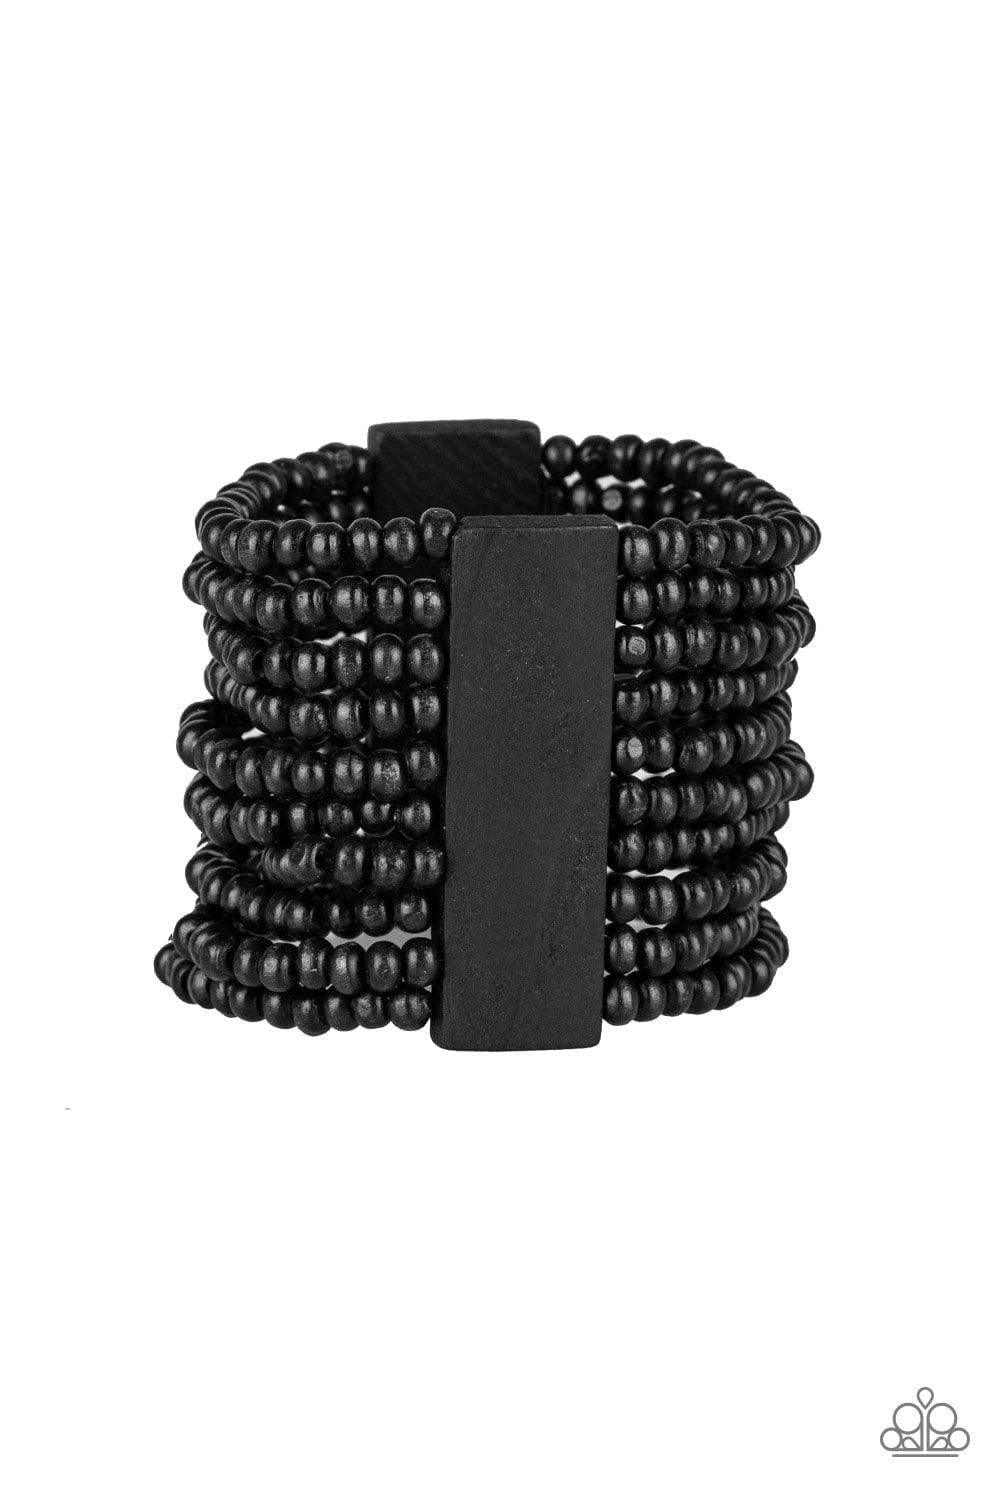 Paparazzi Accessories - Jamaican Me Jam - Black Bracelet - Bling by JessieK